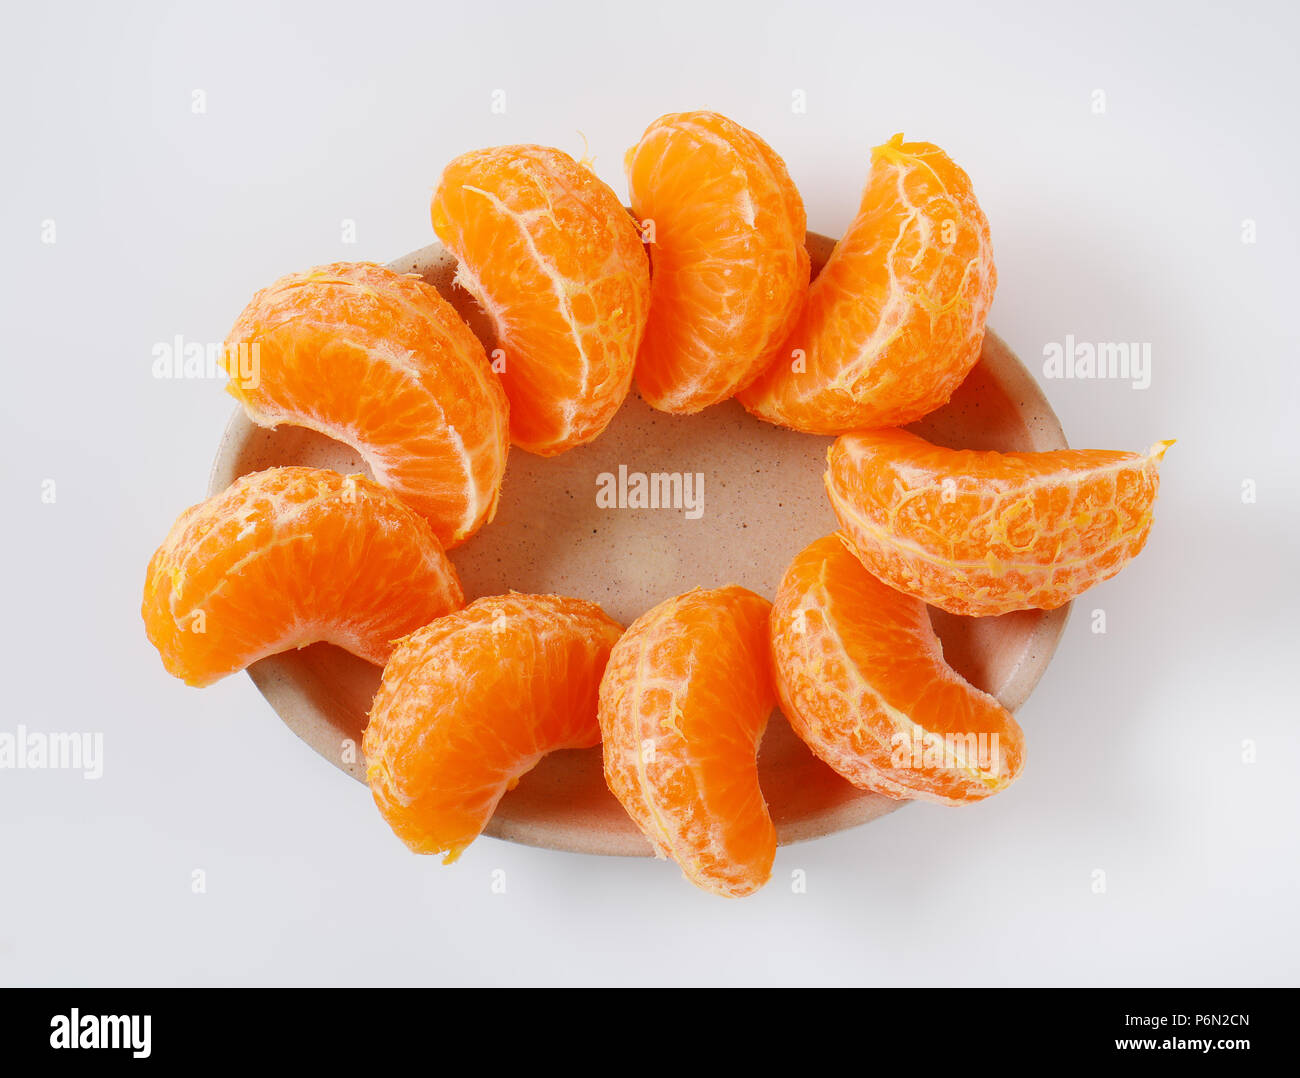 plate of fresh tangerine slices on white background Stock Photo